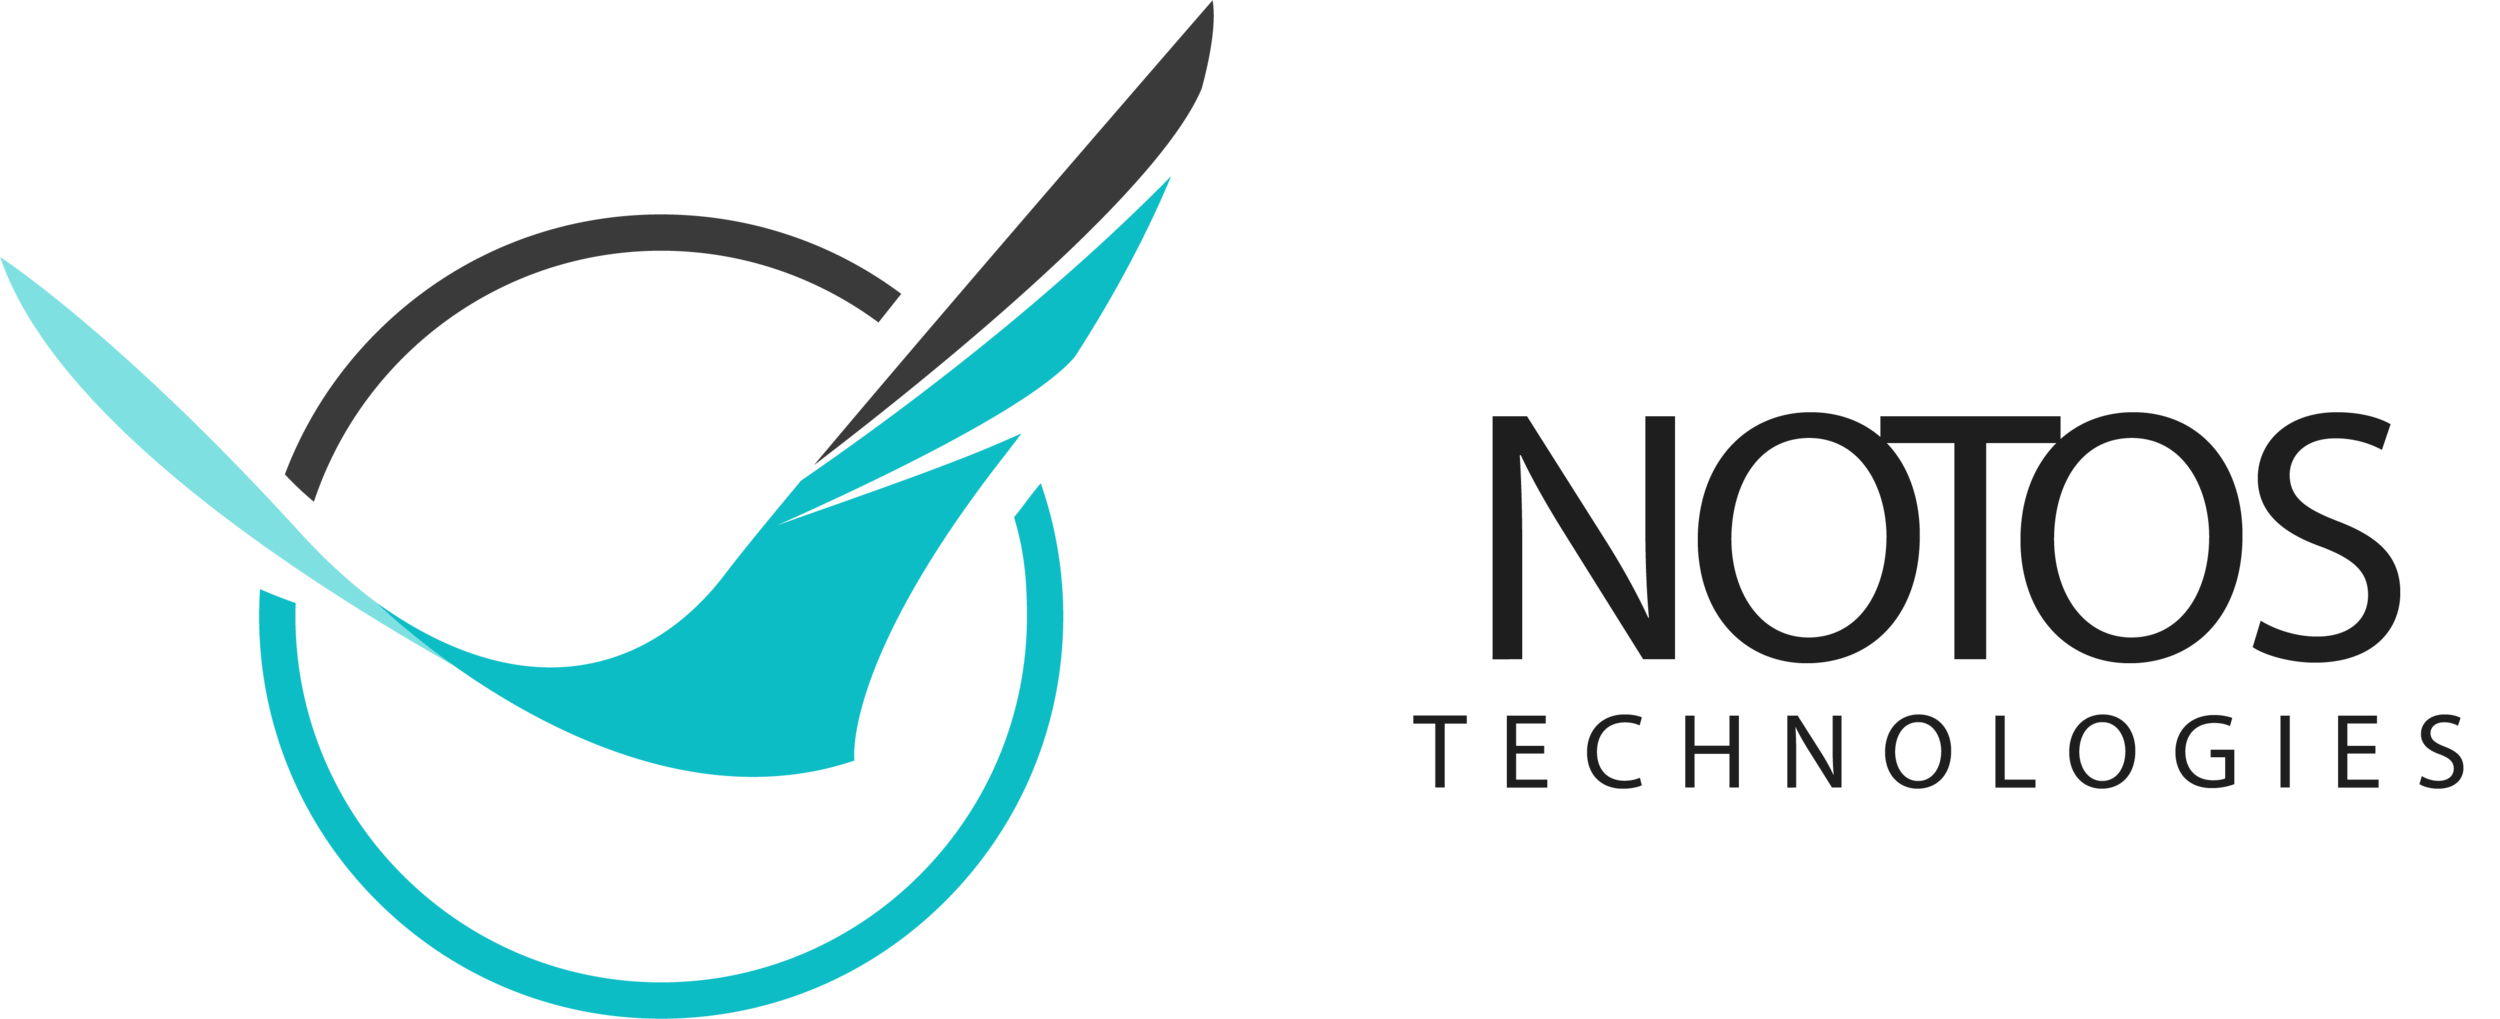 Notos Technologies Logo.png